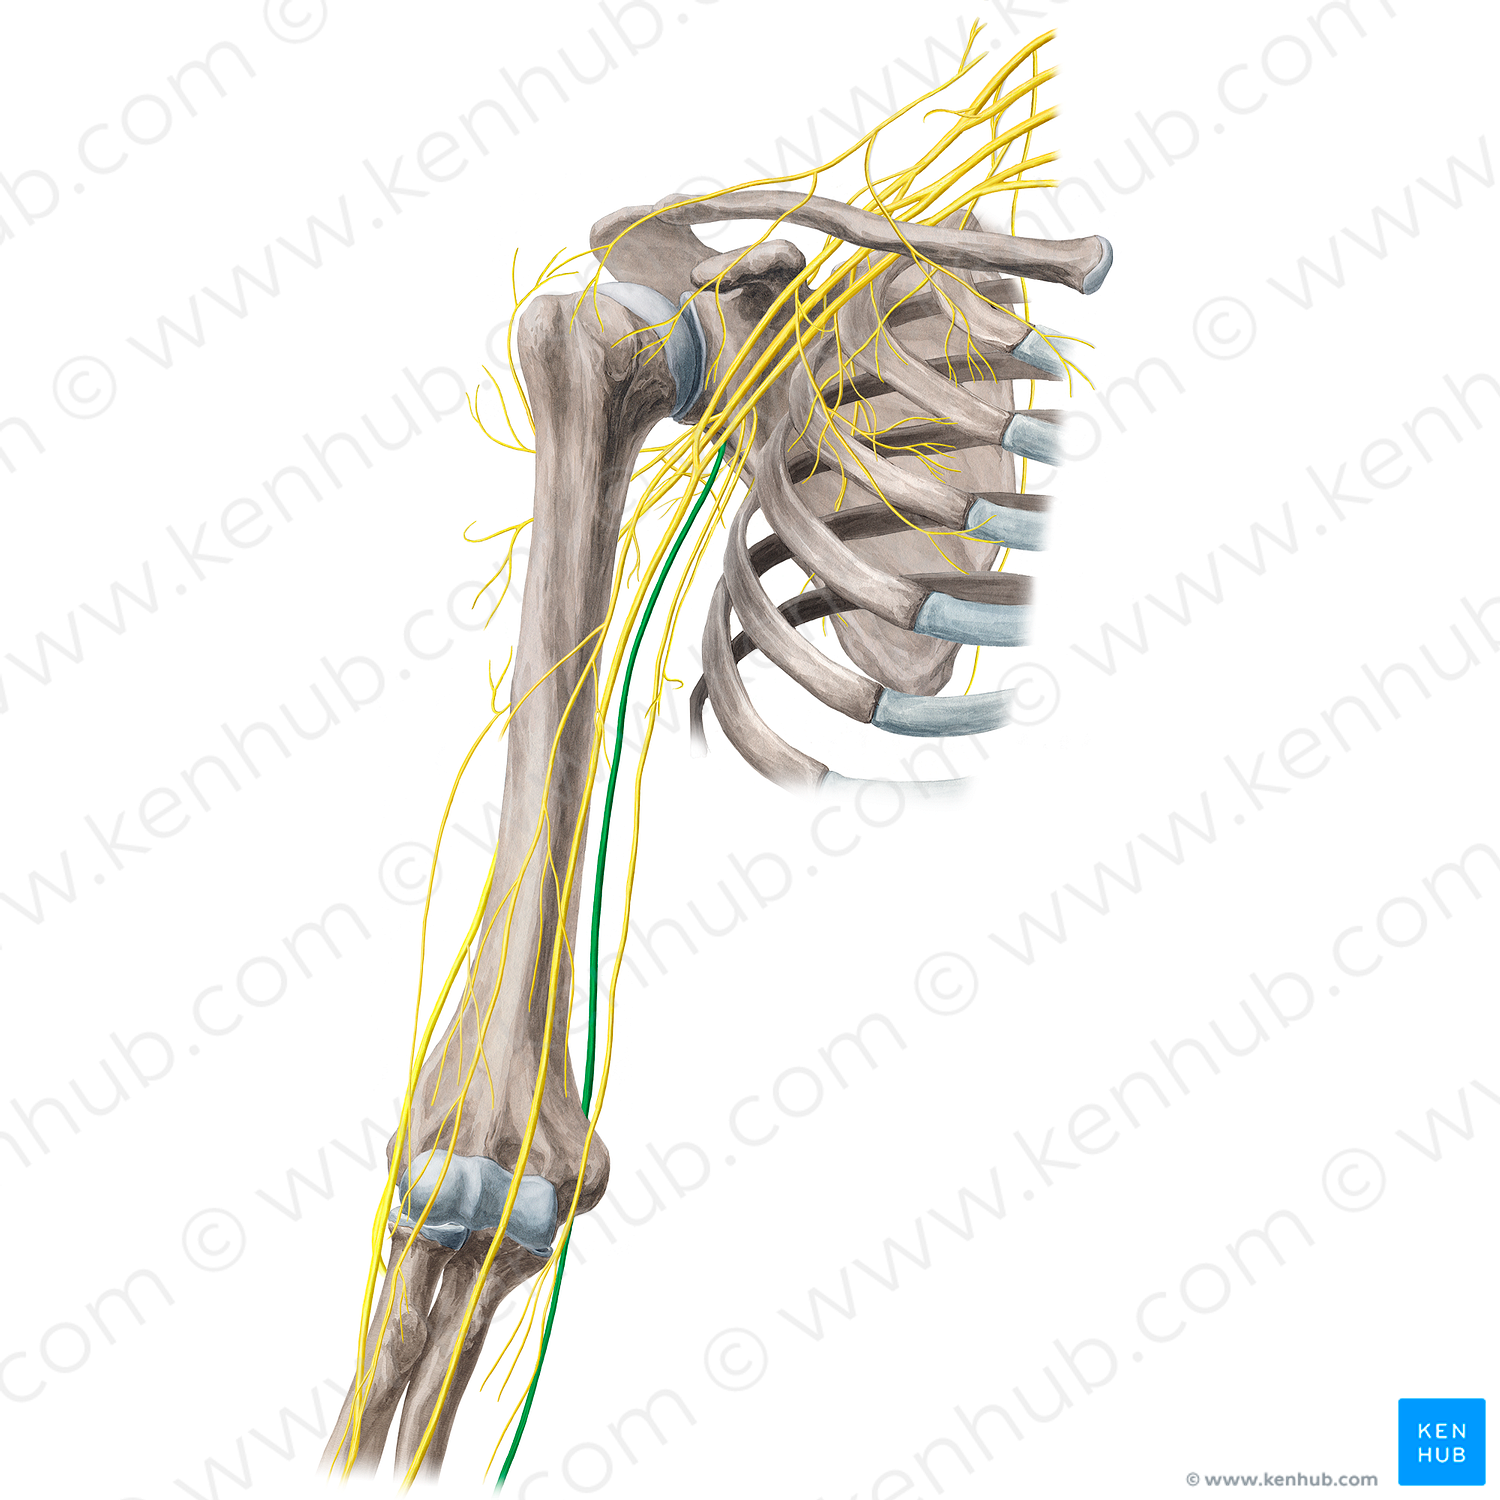 Ulnar nerve (#6850)